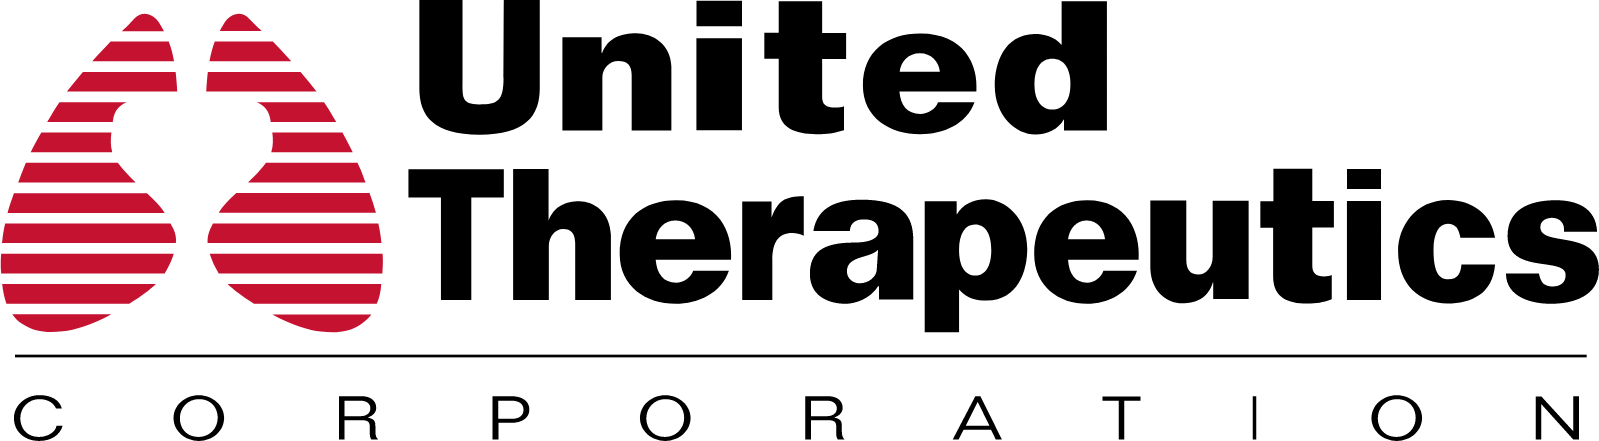 United Therapeutics logo large (transparent PNG)